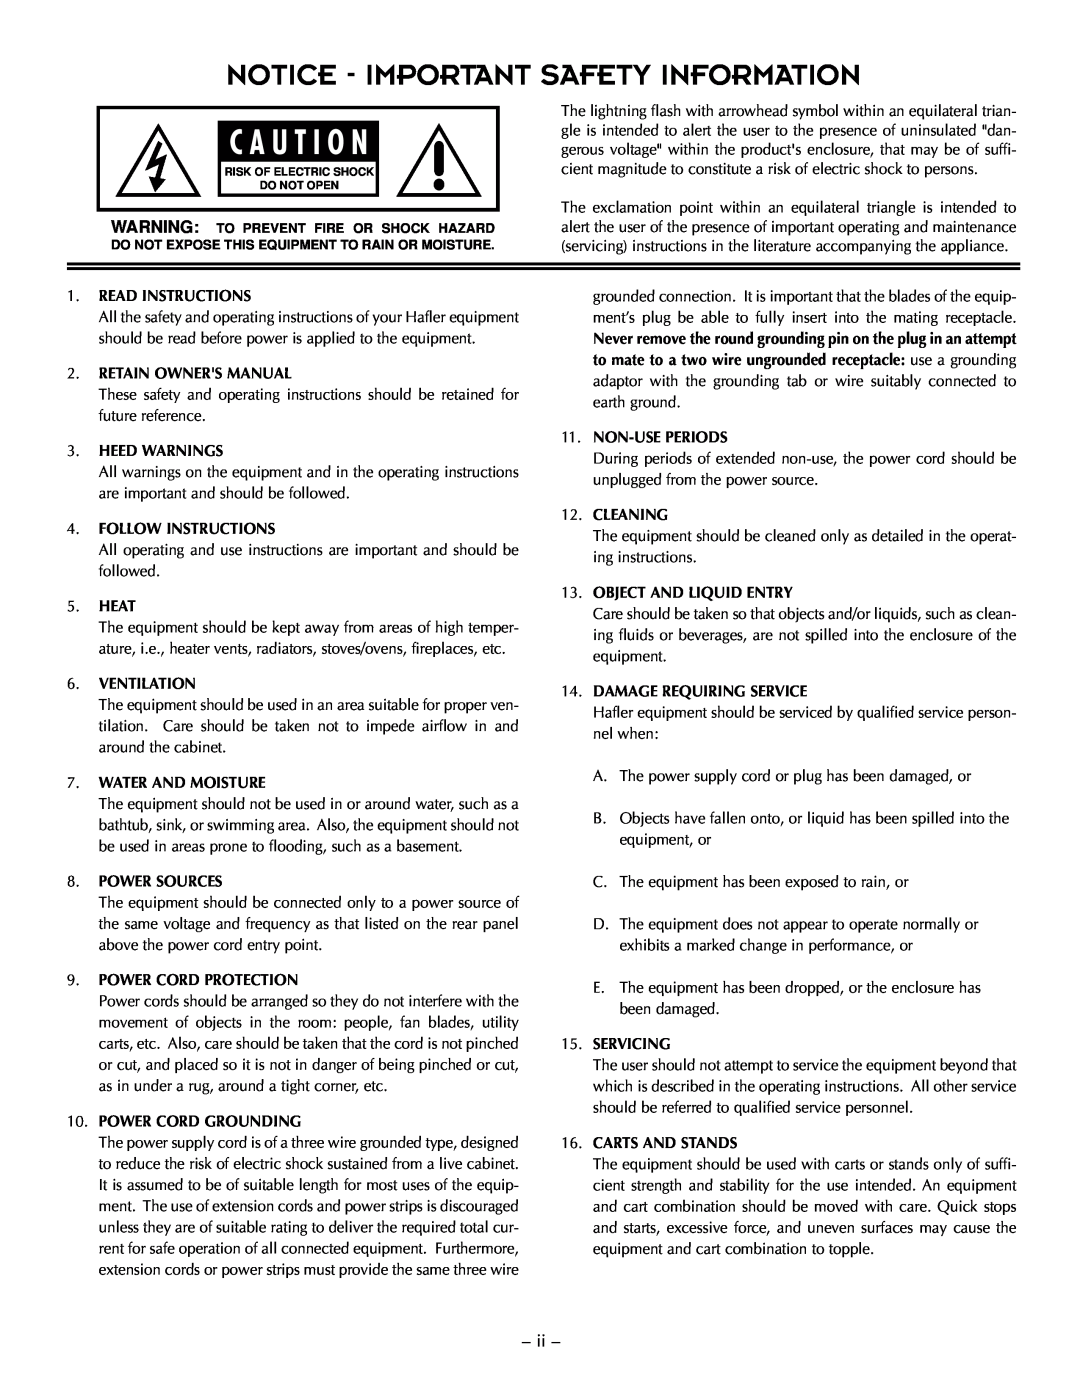 Hafler TRM6.1CE manual Notice - Important Safety Information, C A U T I O N 